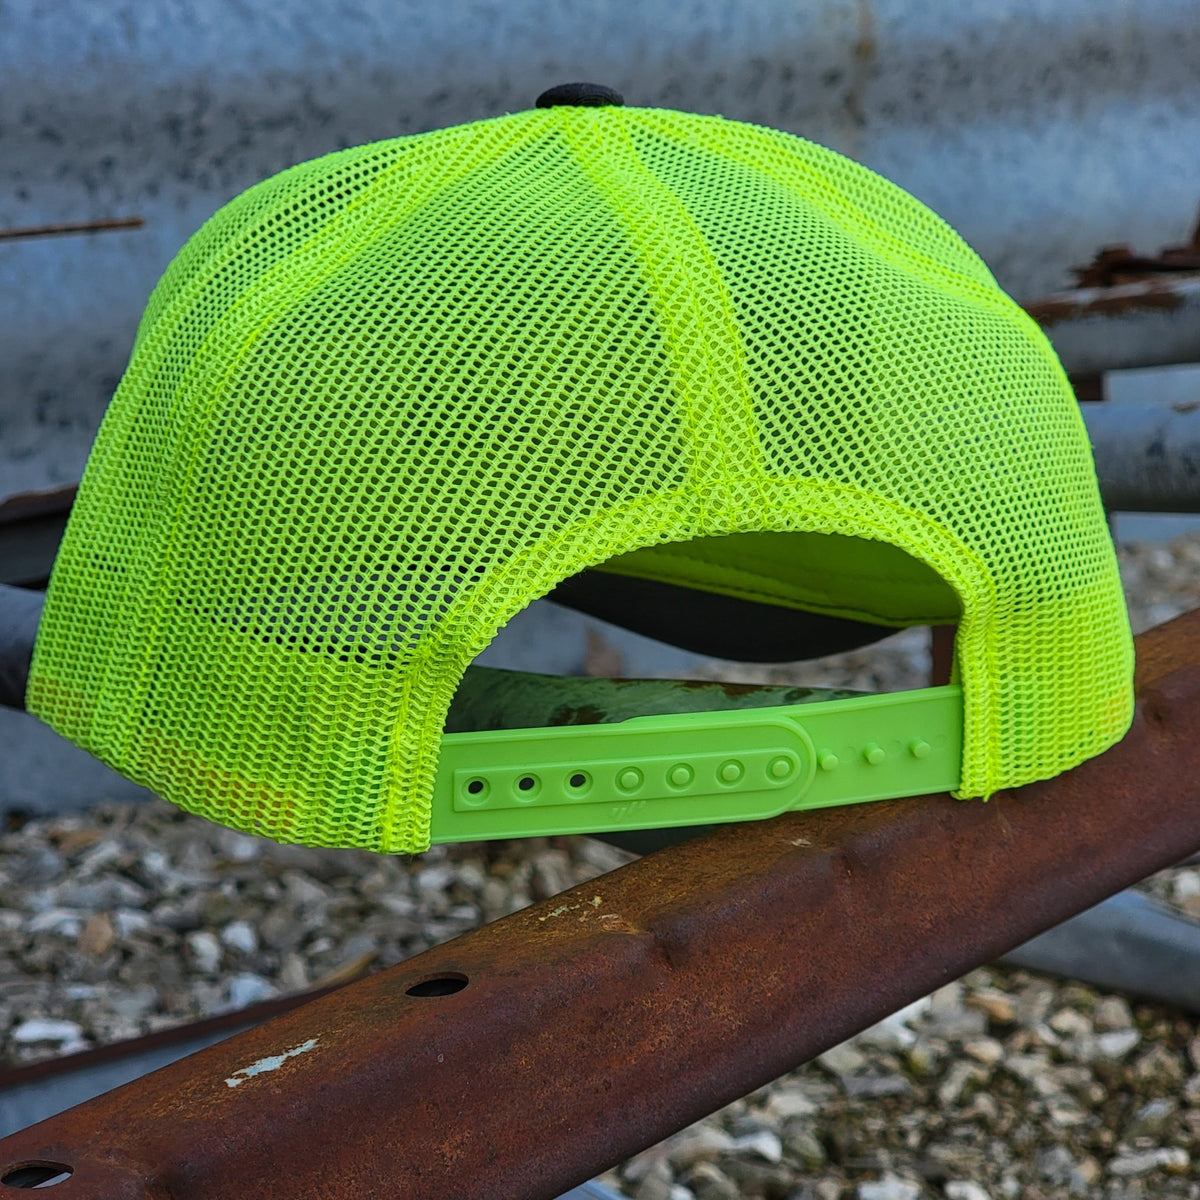 99 Strikes Neon Yellow Green Snapback Hat - 99 Strikes Fishing Co